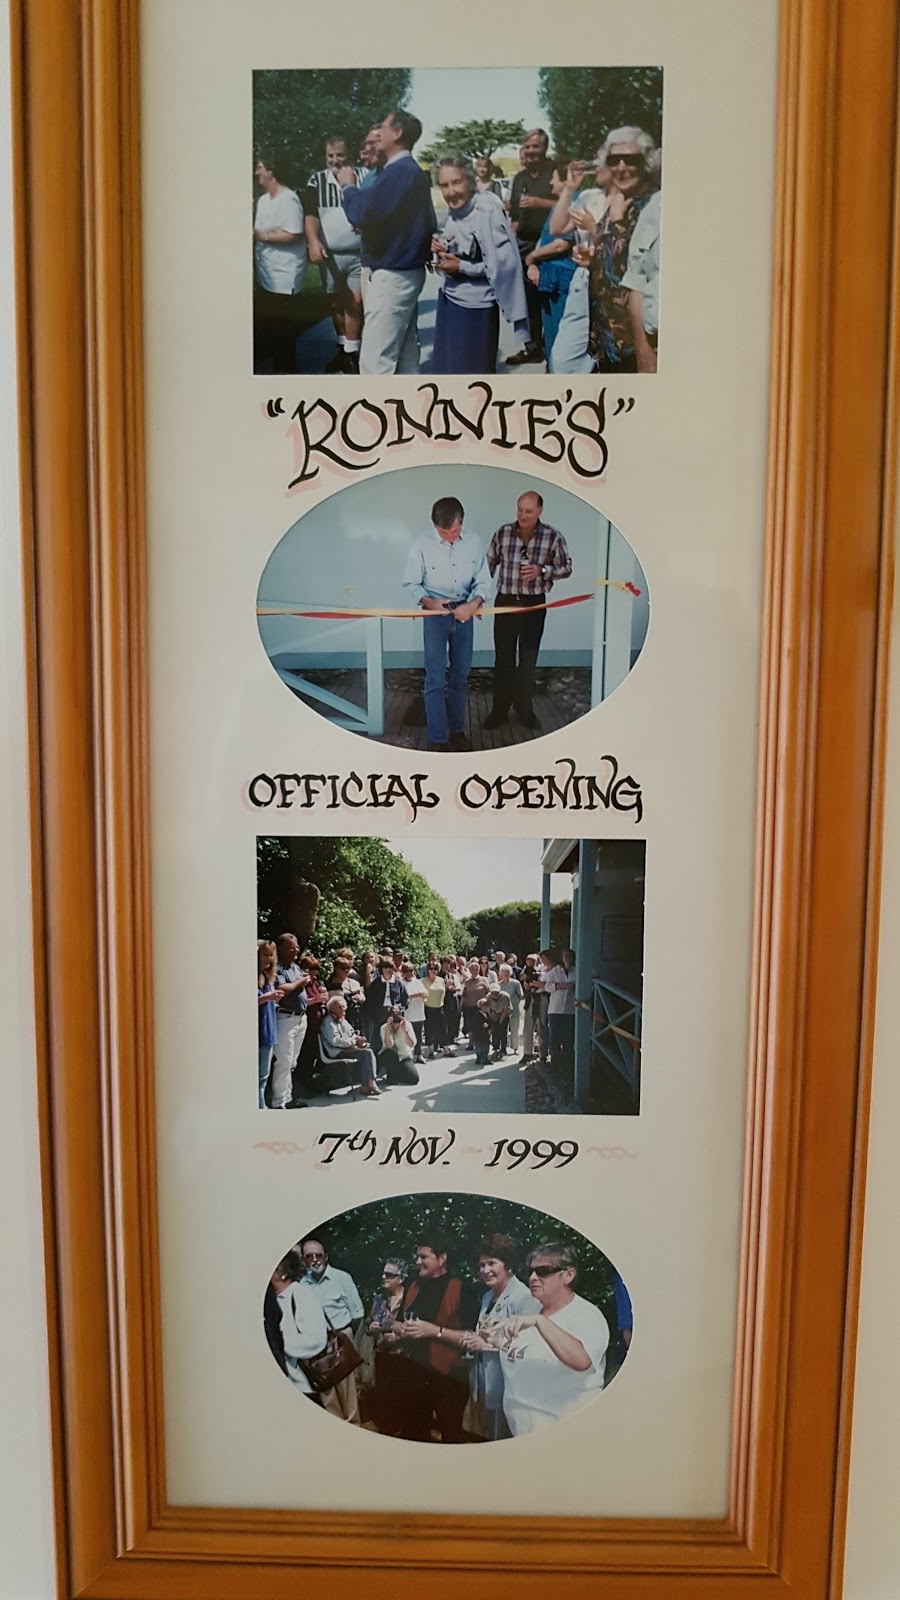 Ronnies Tea Rooms | cafe | Foreshore Rd, Seaspray VIC 3851, Australia | 0351464420 OR +61 3 5146 4420